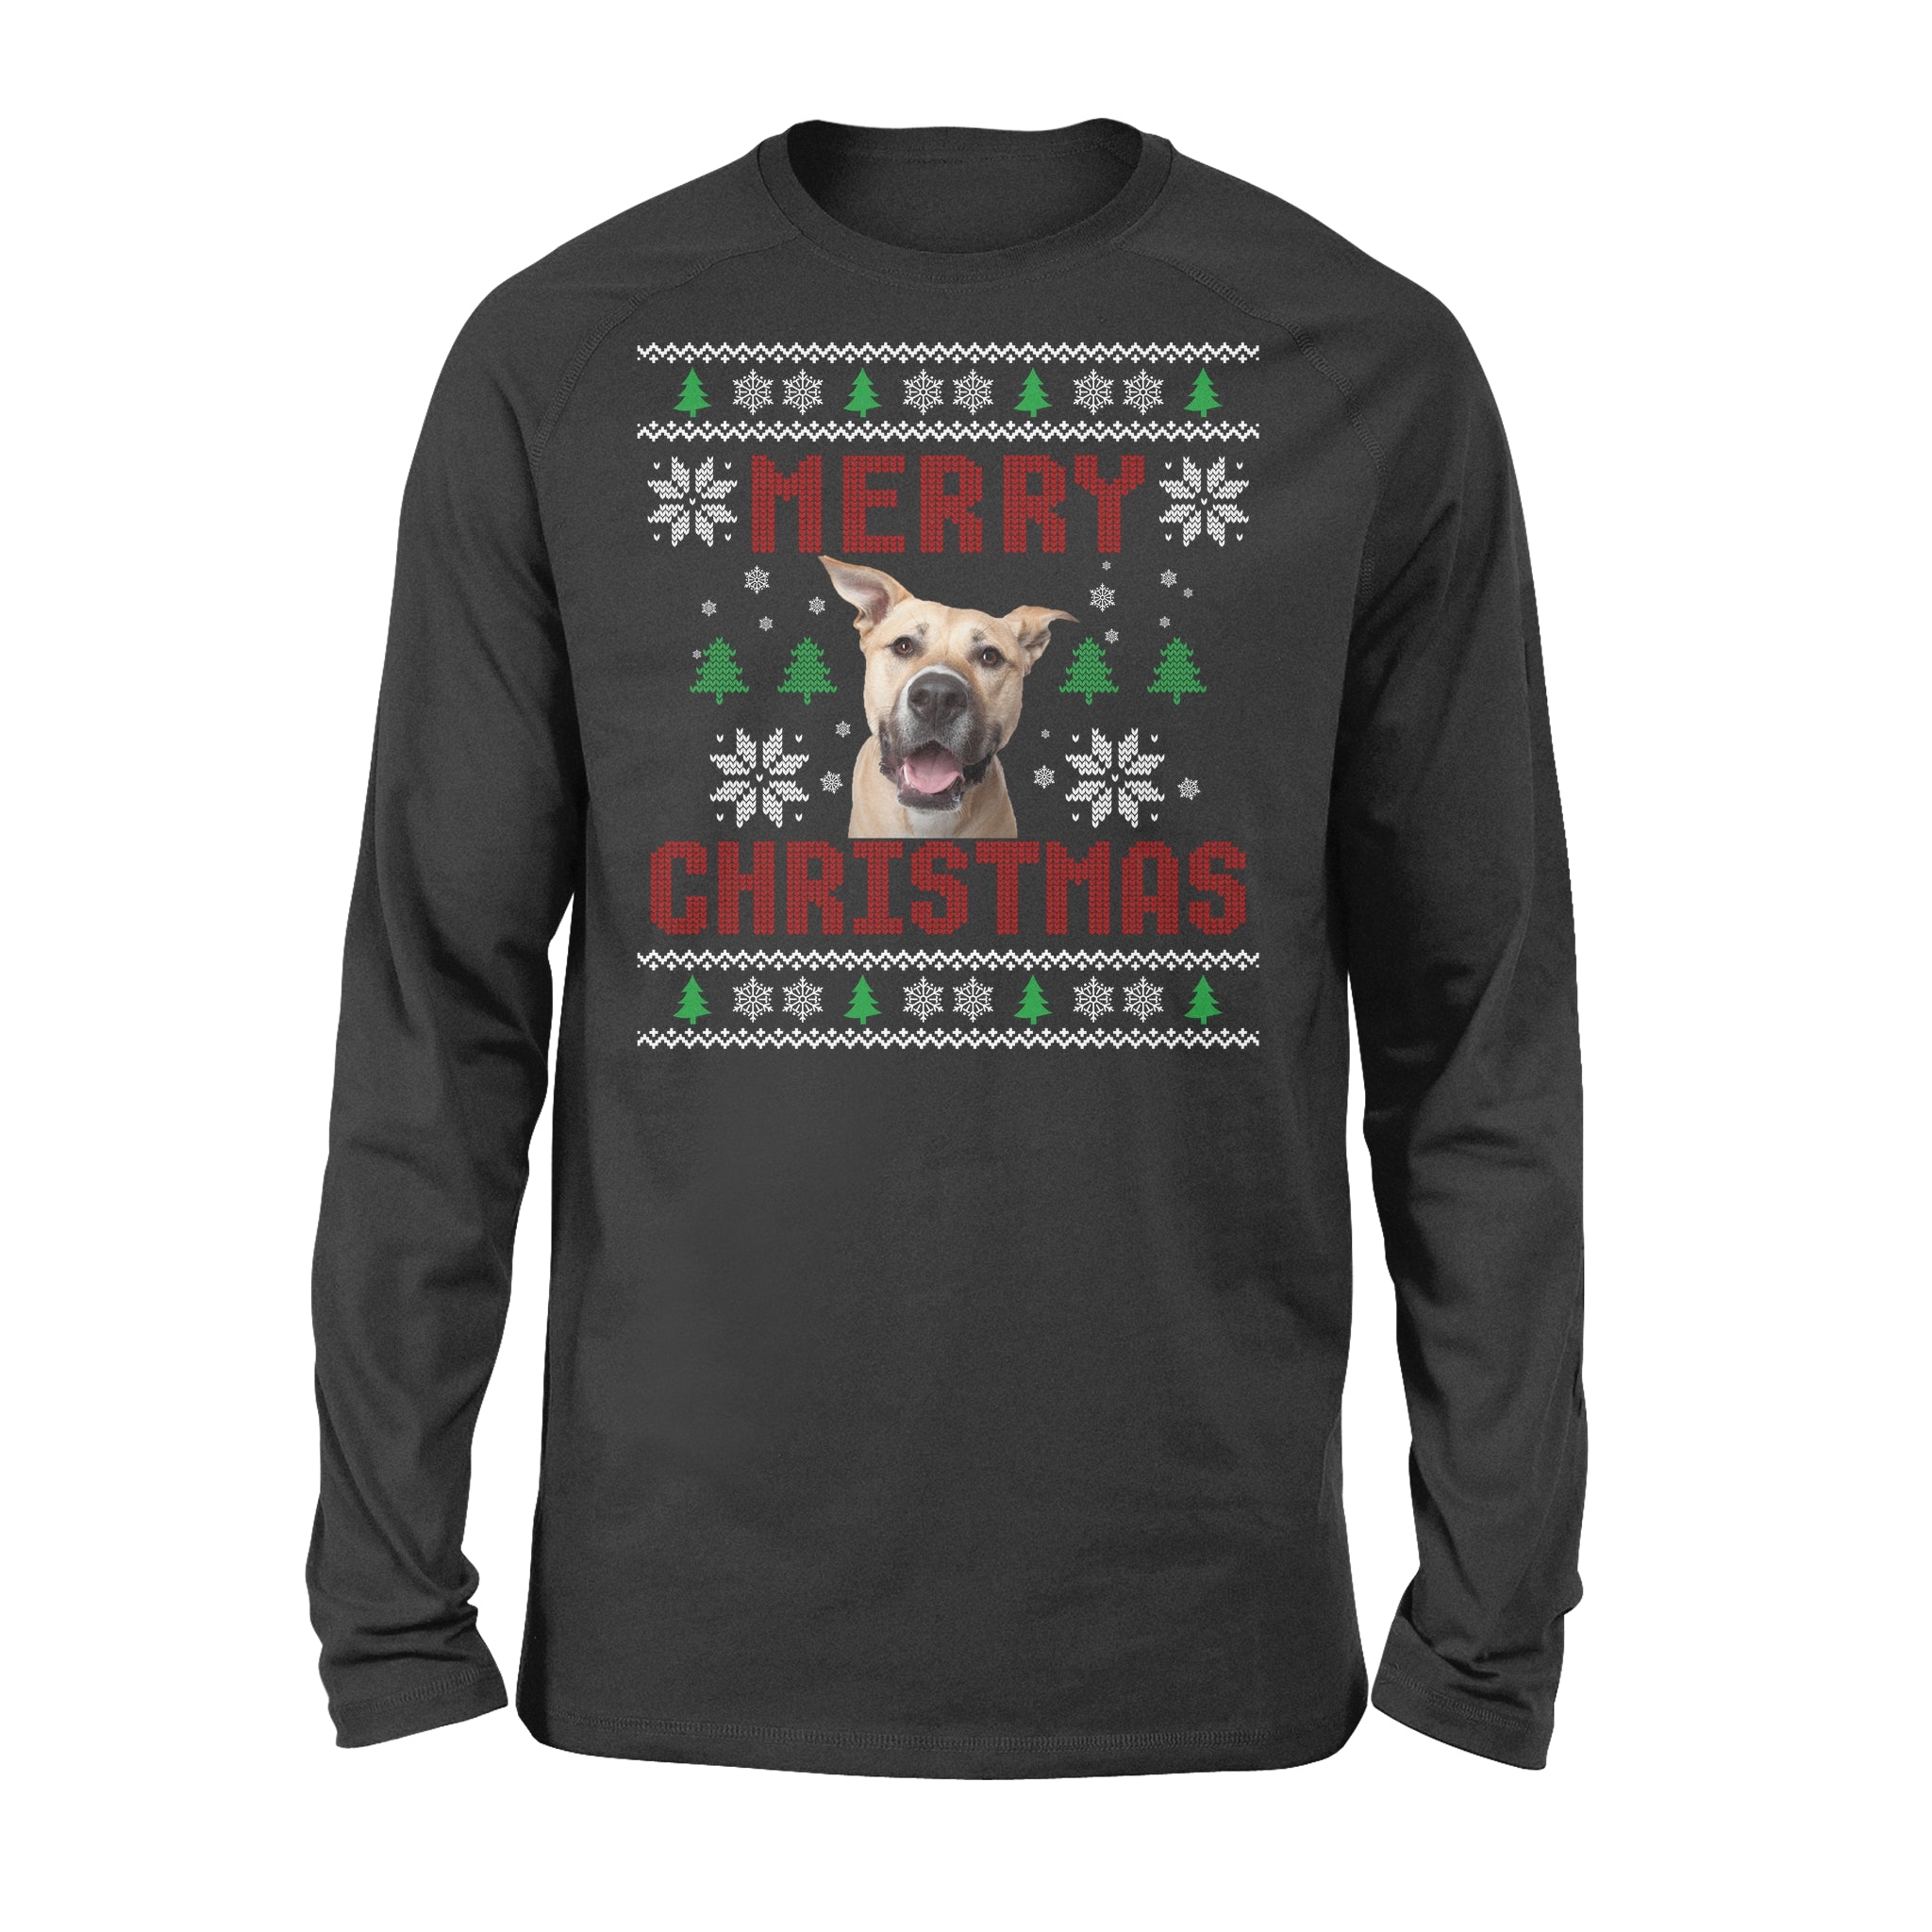 Custom Pet Face Ugly Christmas Sweatshirt T-Shirt - Funny Ugly Christmas Sweater - Dog Mom - Dog Lover Gift - Pet Lover Gift - Cat Mom Sweater NQSD7  - Standard Long Sleeve